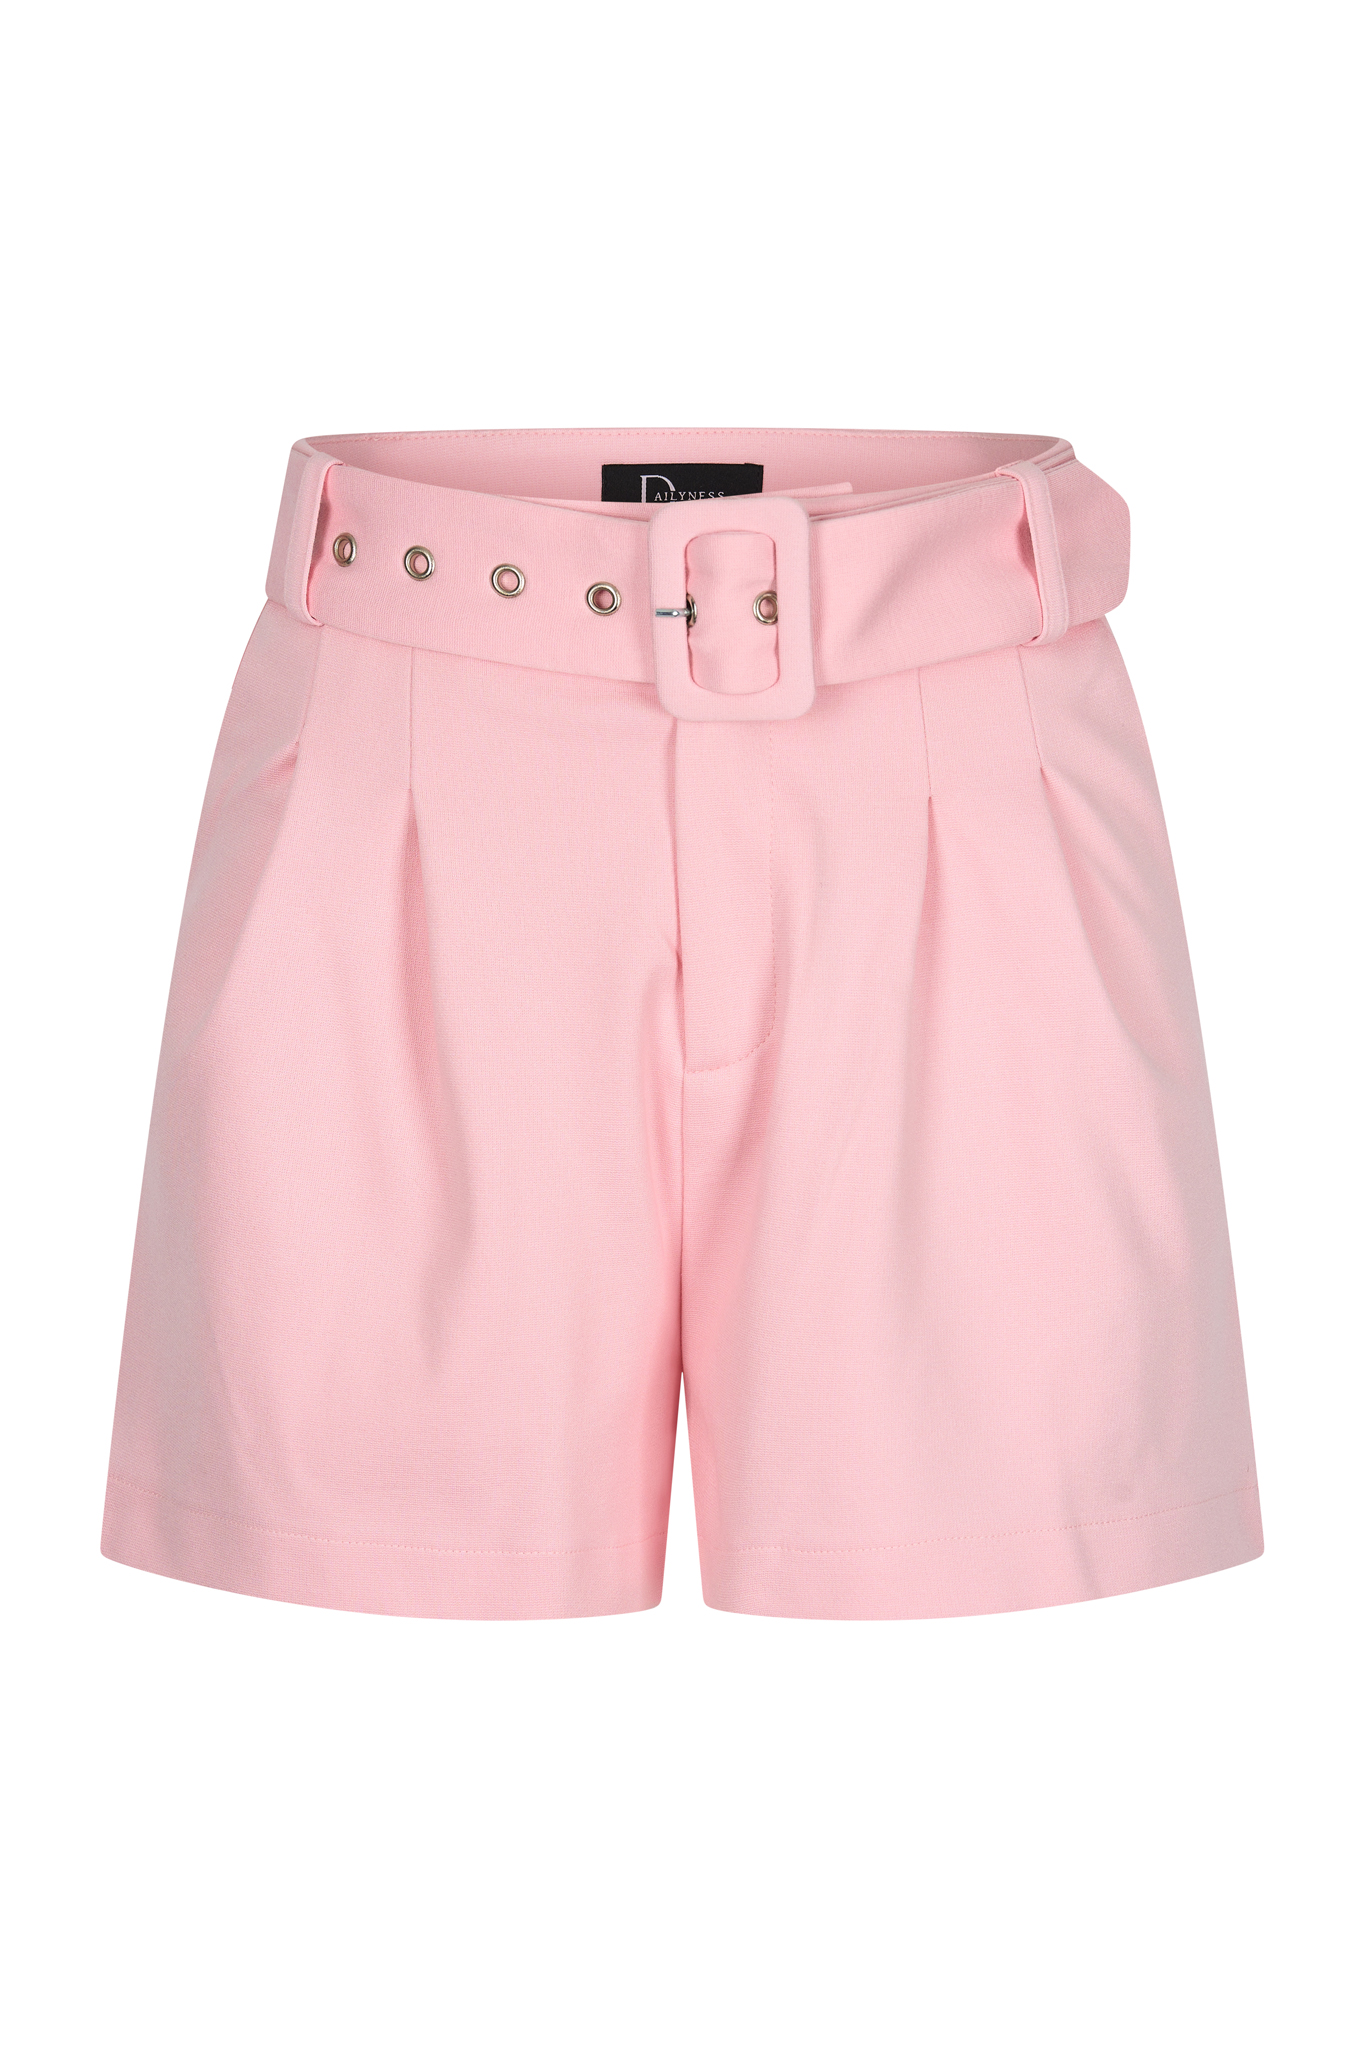 Light pink shorts